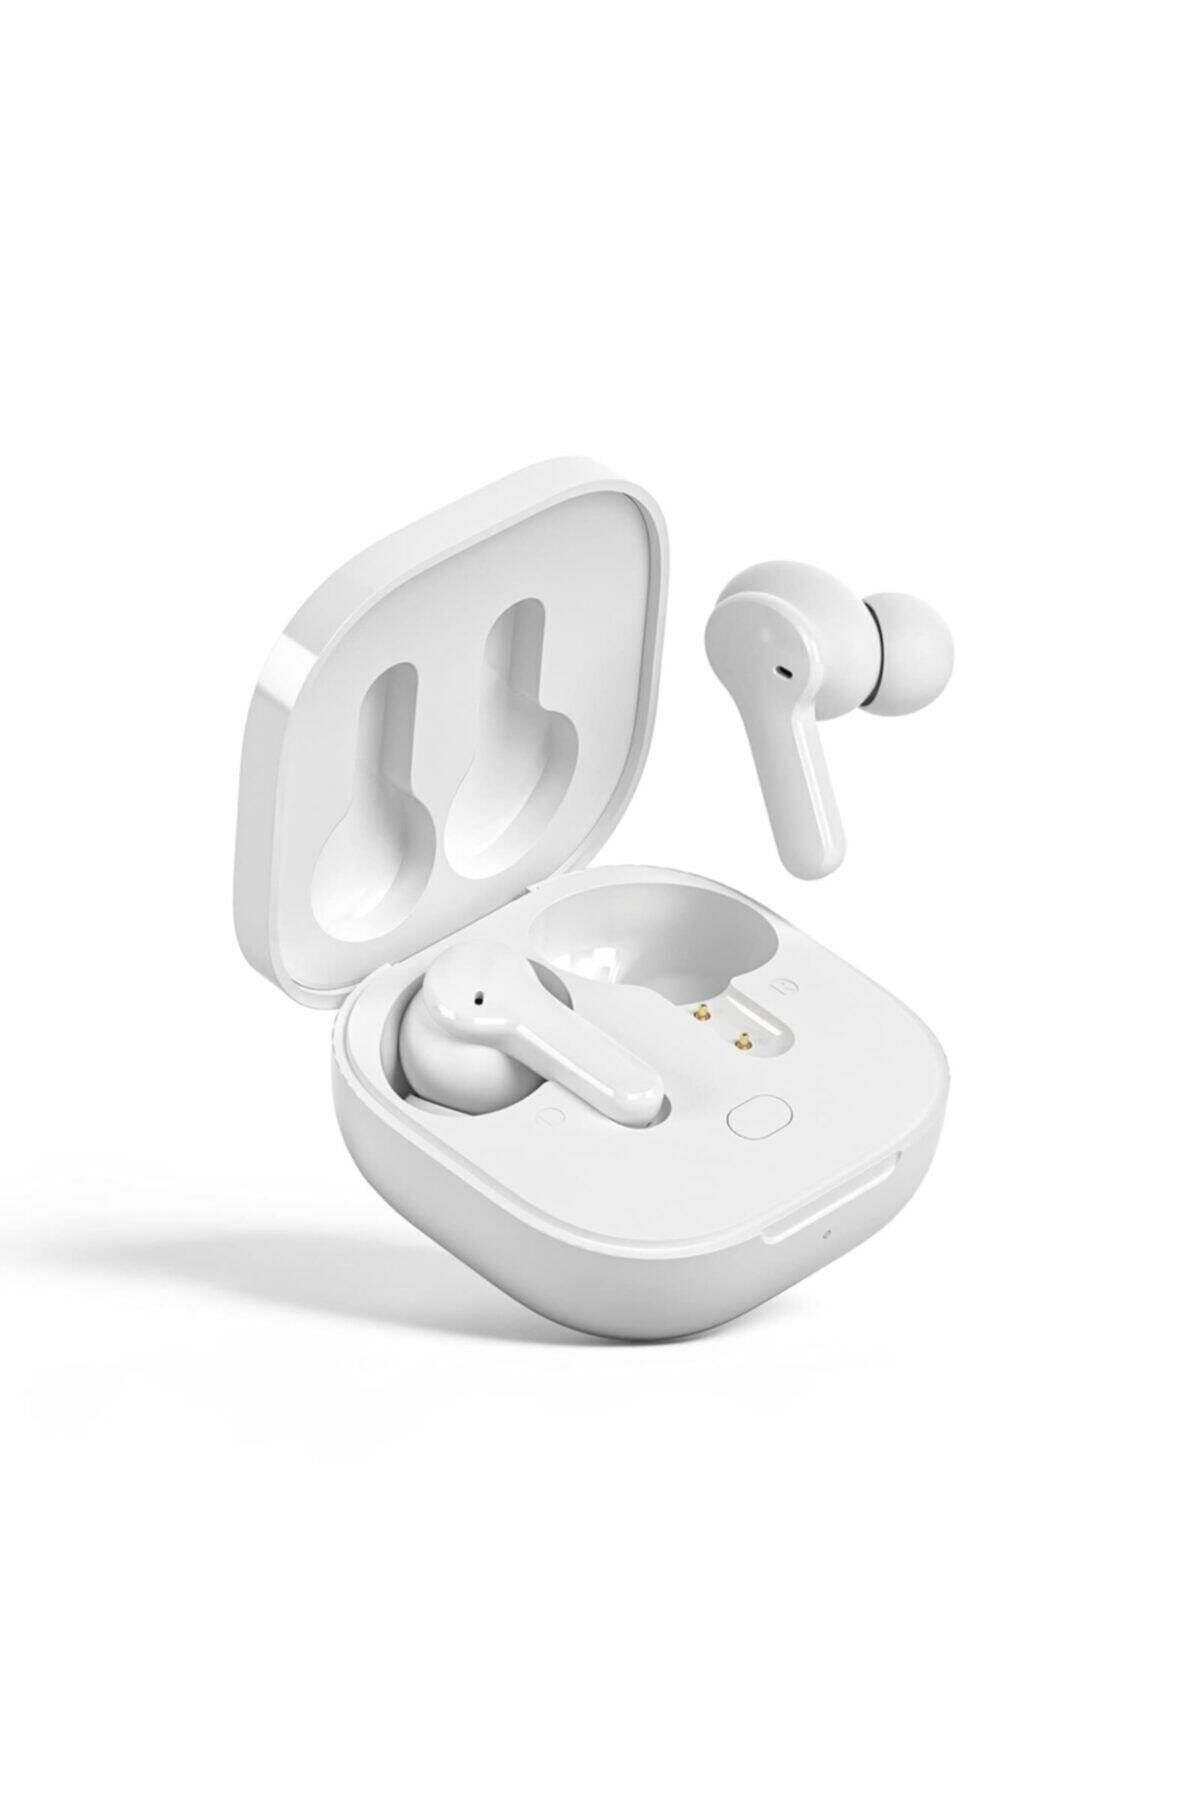 Qcy T13X Bluetooth 5.1 Beyaz Kulakiçi Kulaklık (QCY Türkiye Garantili)